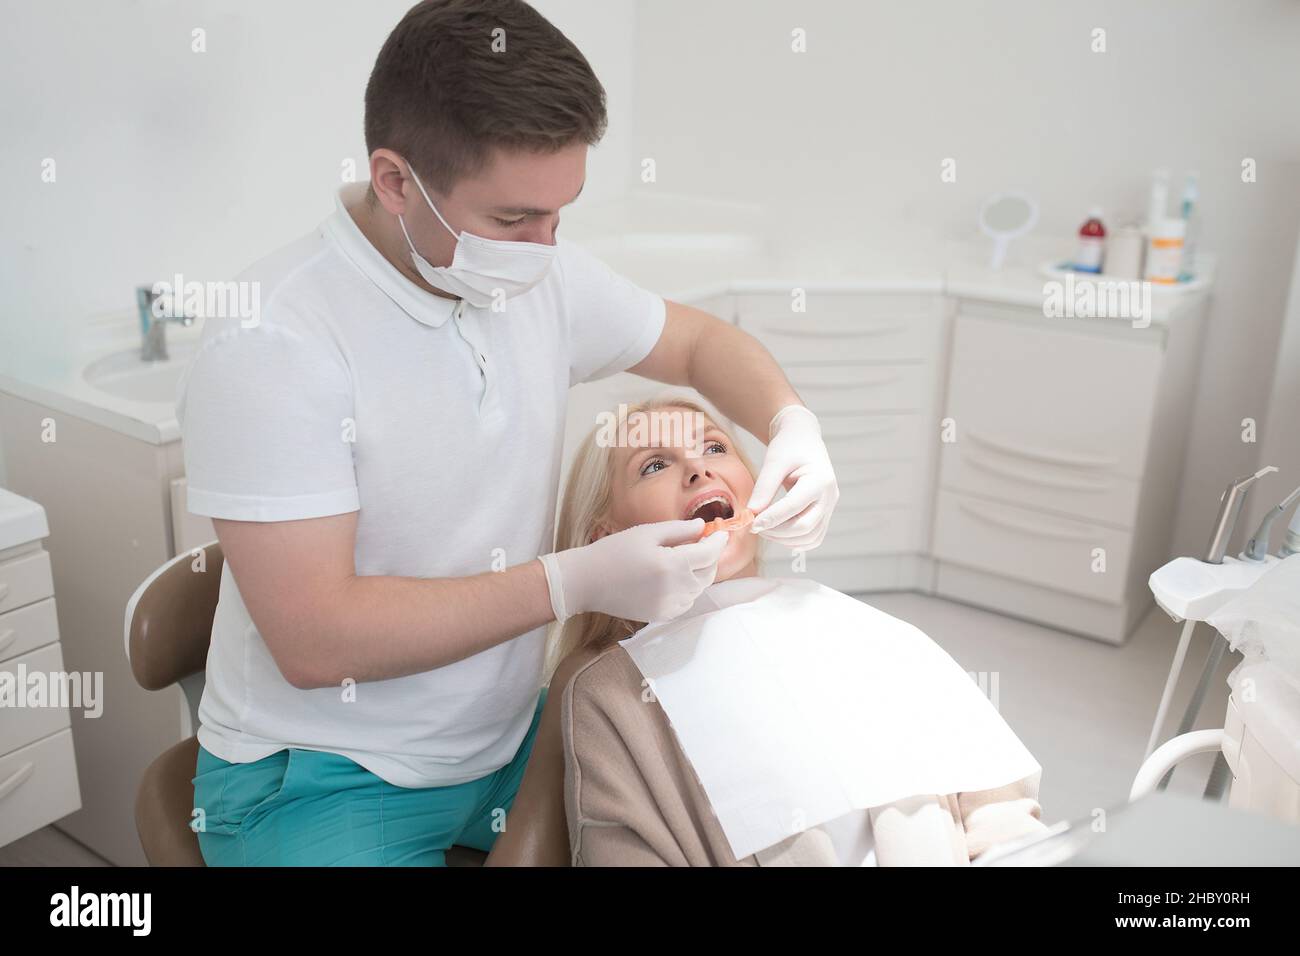 Dental surgeon making teeth replacement procedure Stock Photo